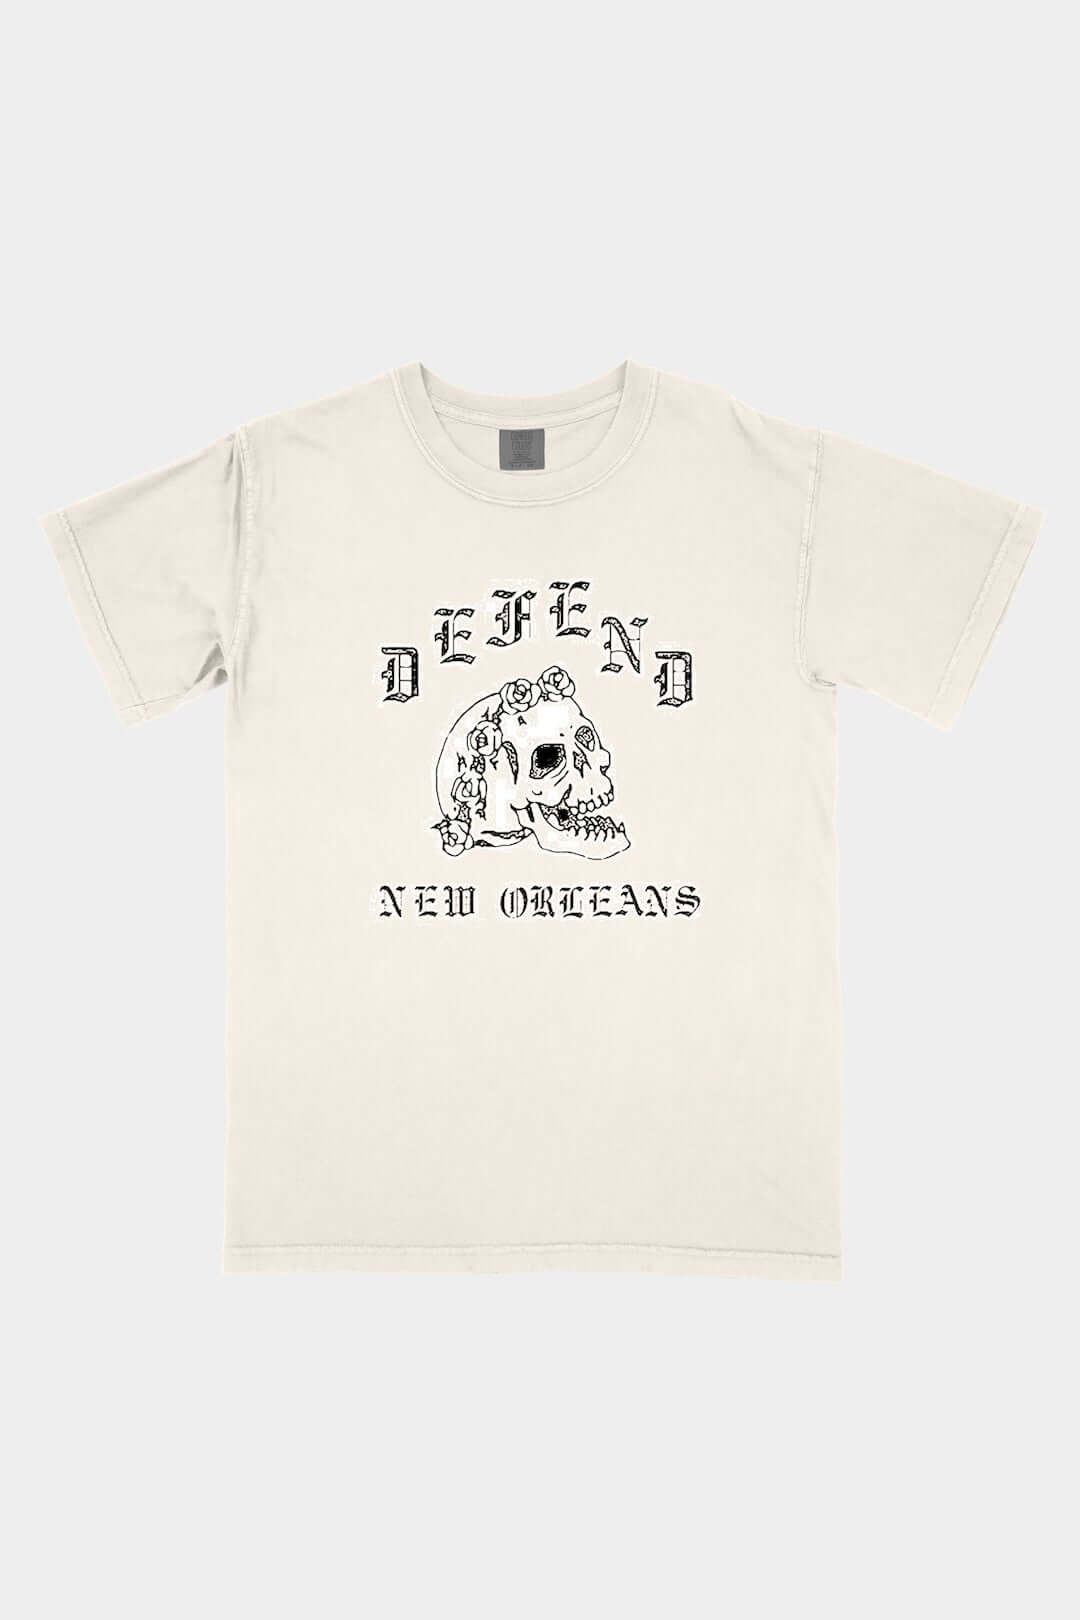 Defend Louisiana T-Shirt - Mens – ShopSWLA